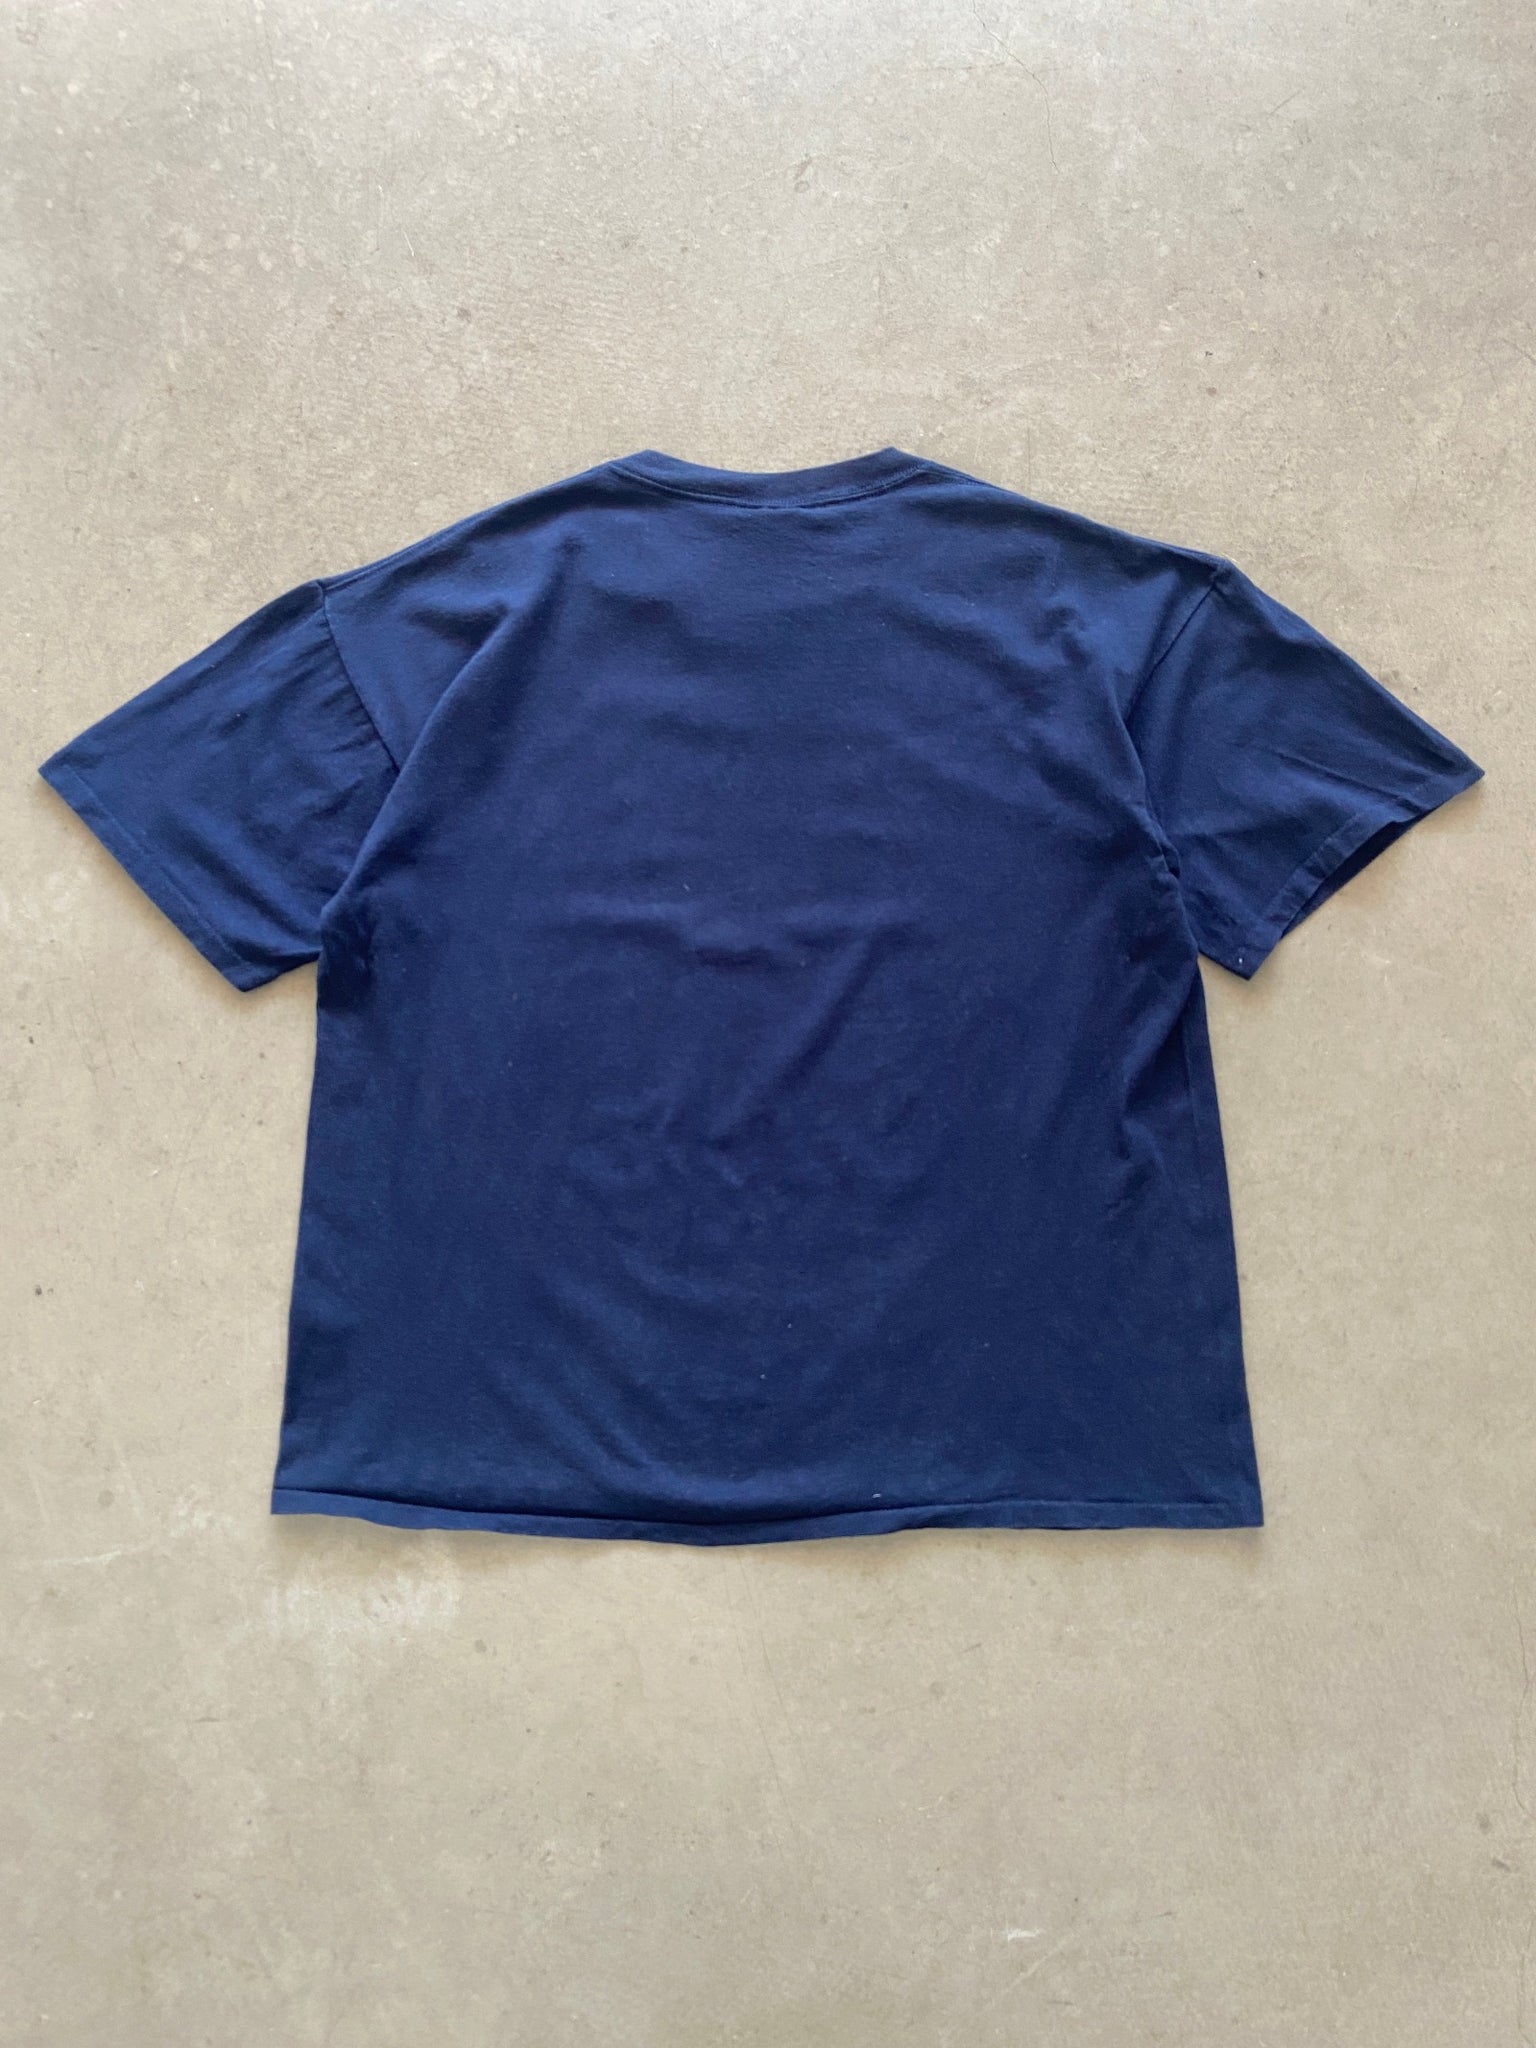 2001 New Found Glory T-Shirt - XL